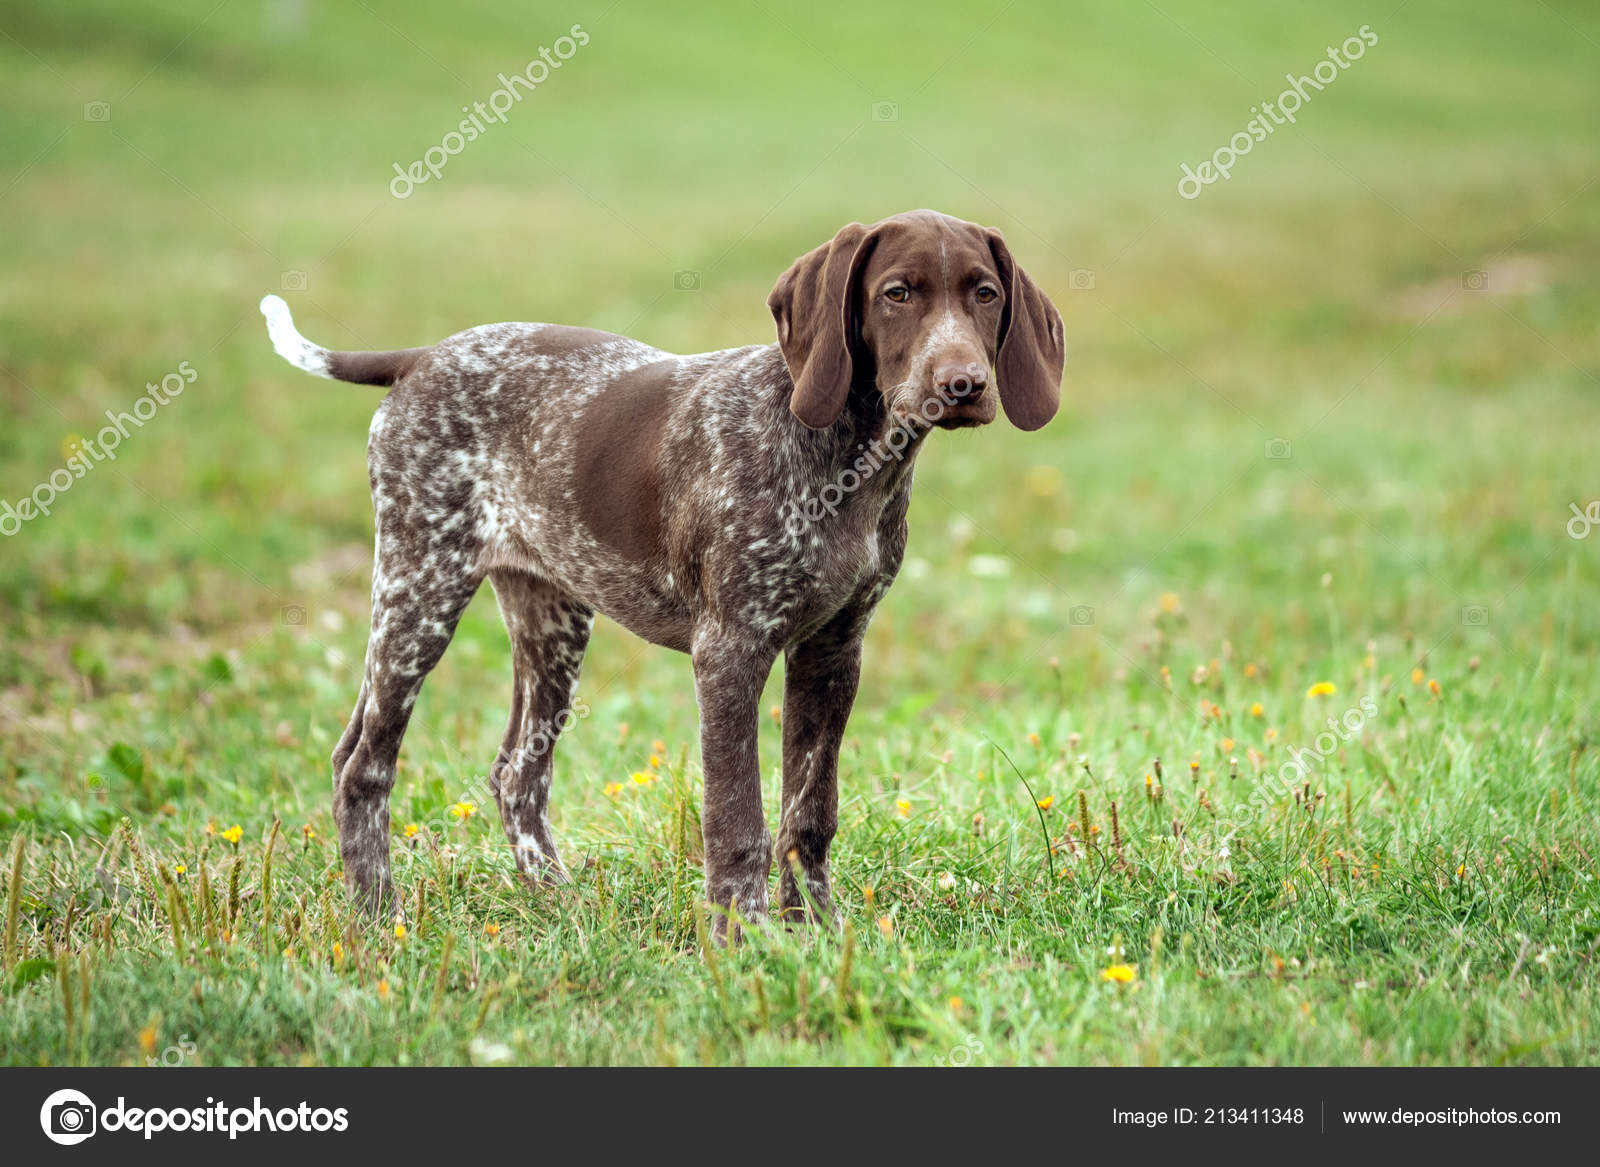 German Shorthaired Pointer German Kurtshaar One Brown Spotted Puppy Sad Stock Photo C Evaheaven2018 213411348